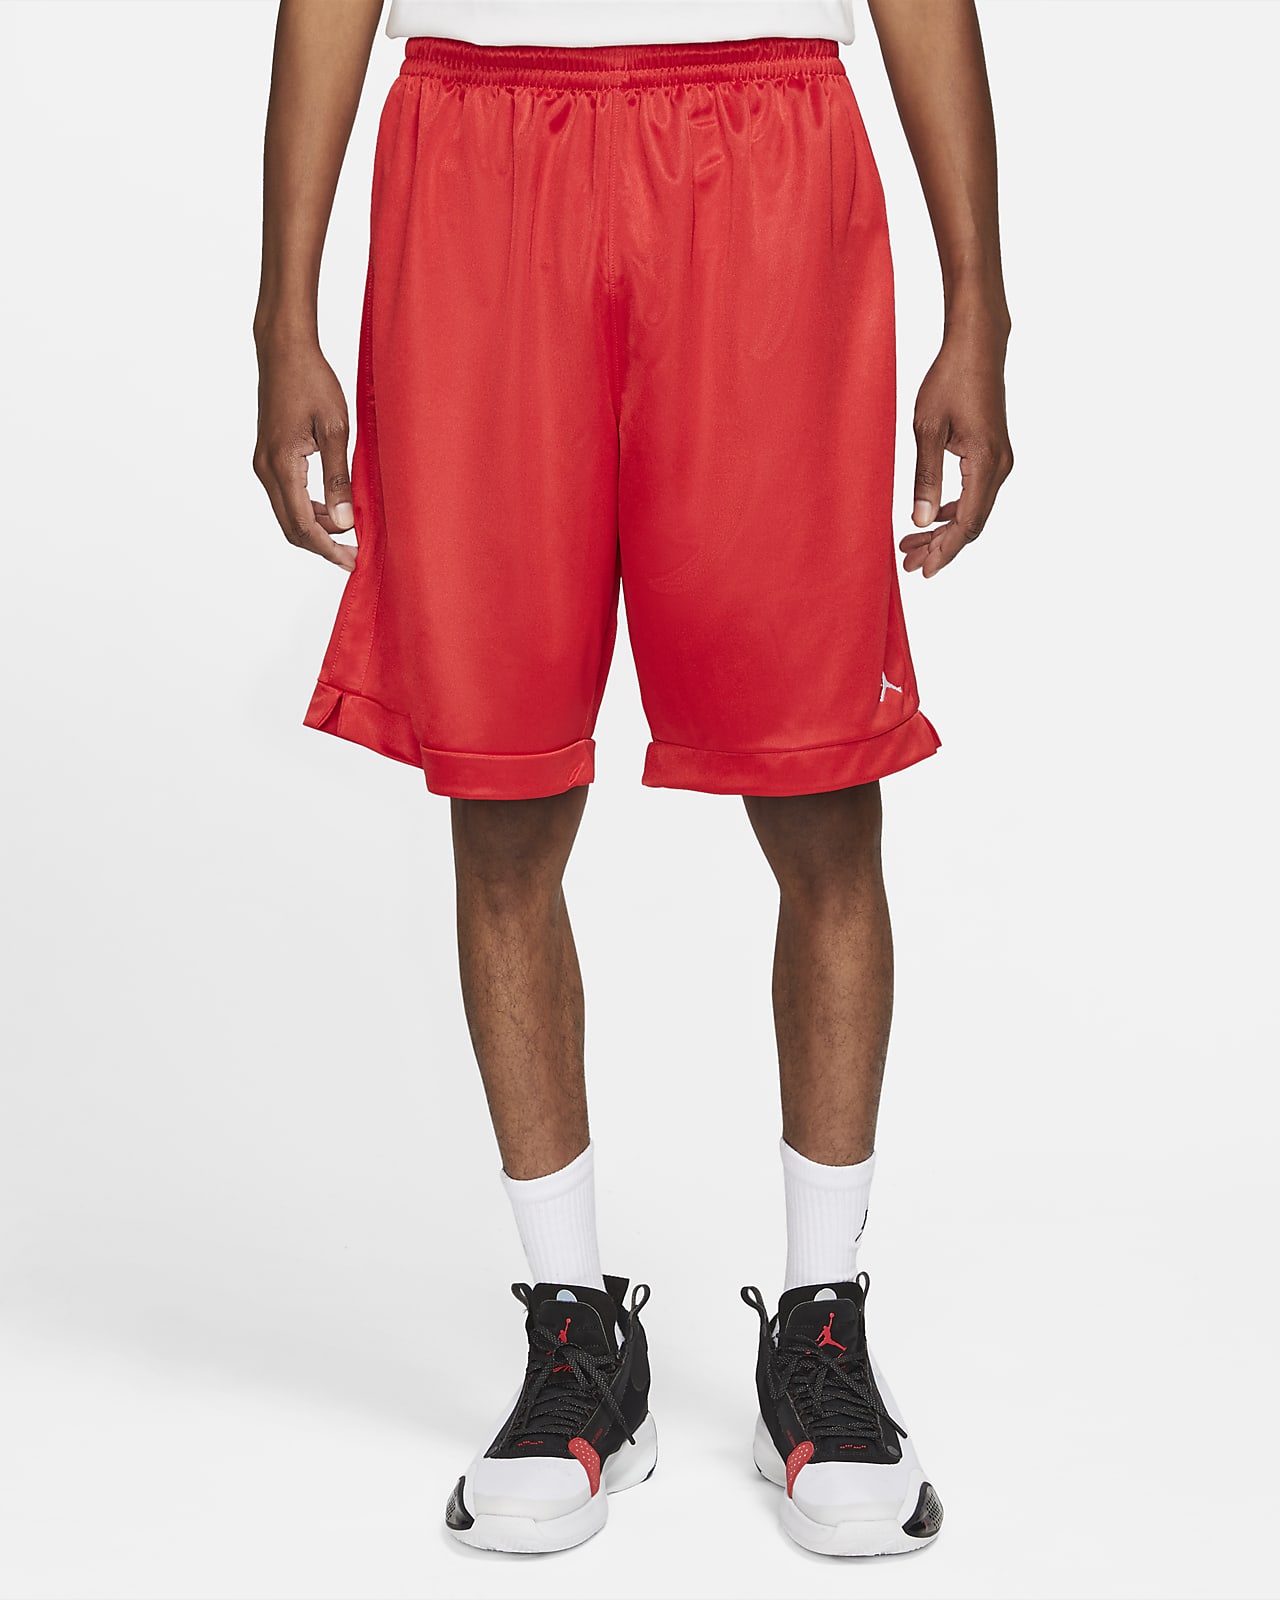 Jordan Training Men's Basketball Shorts